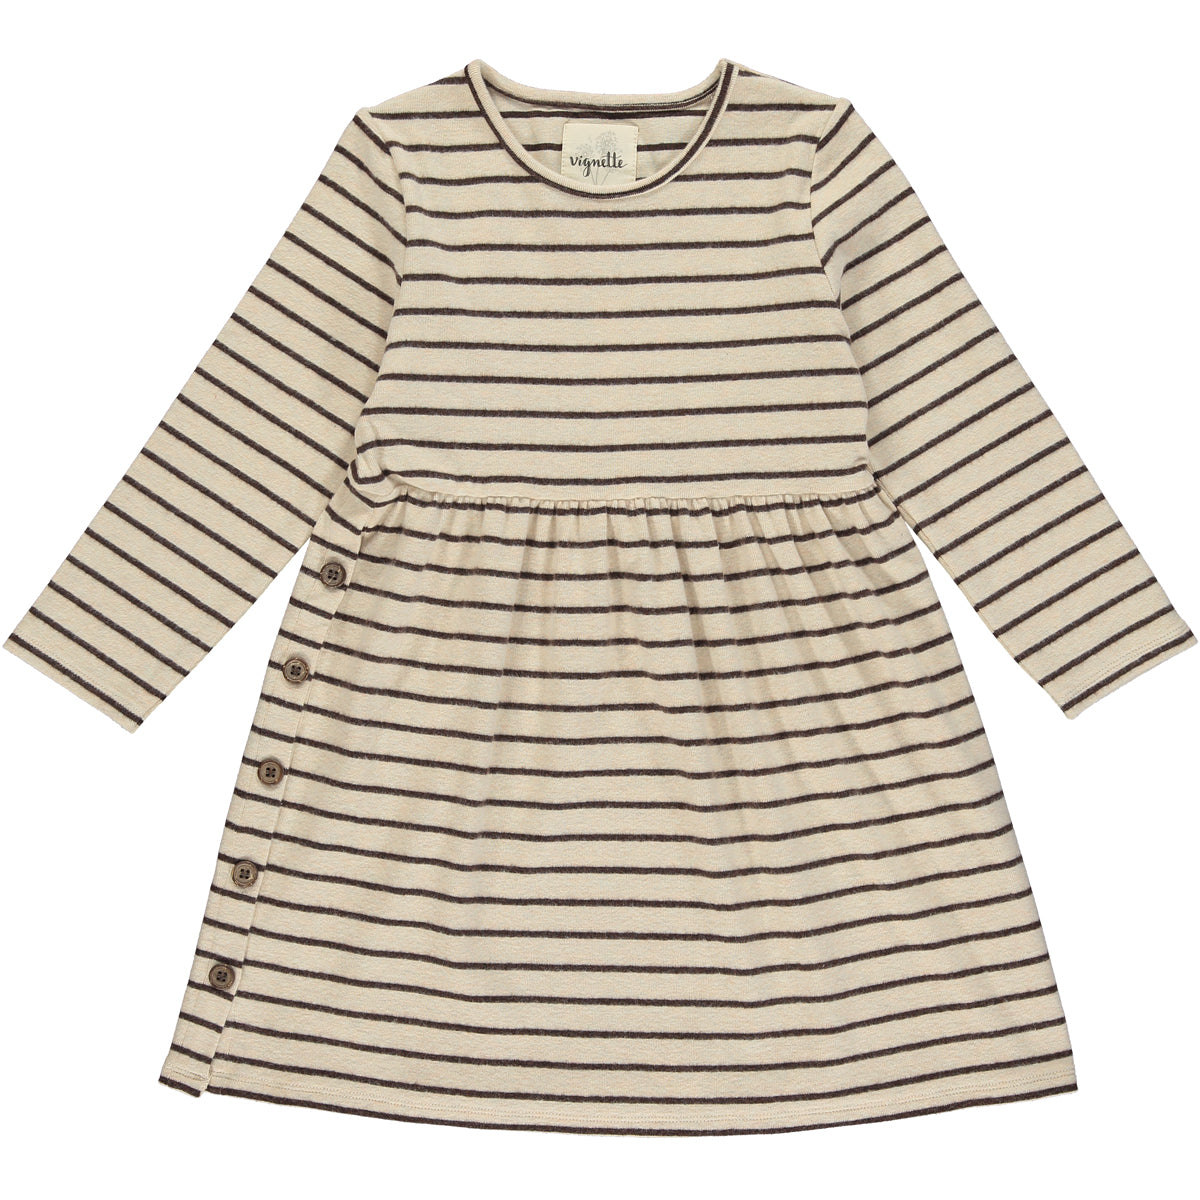 Madigan Dress in Cream/Charcoal Stripe